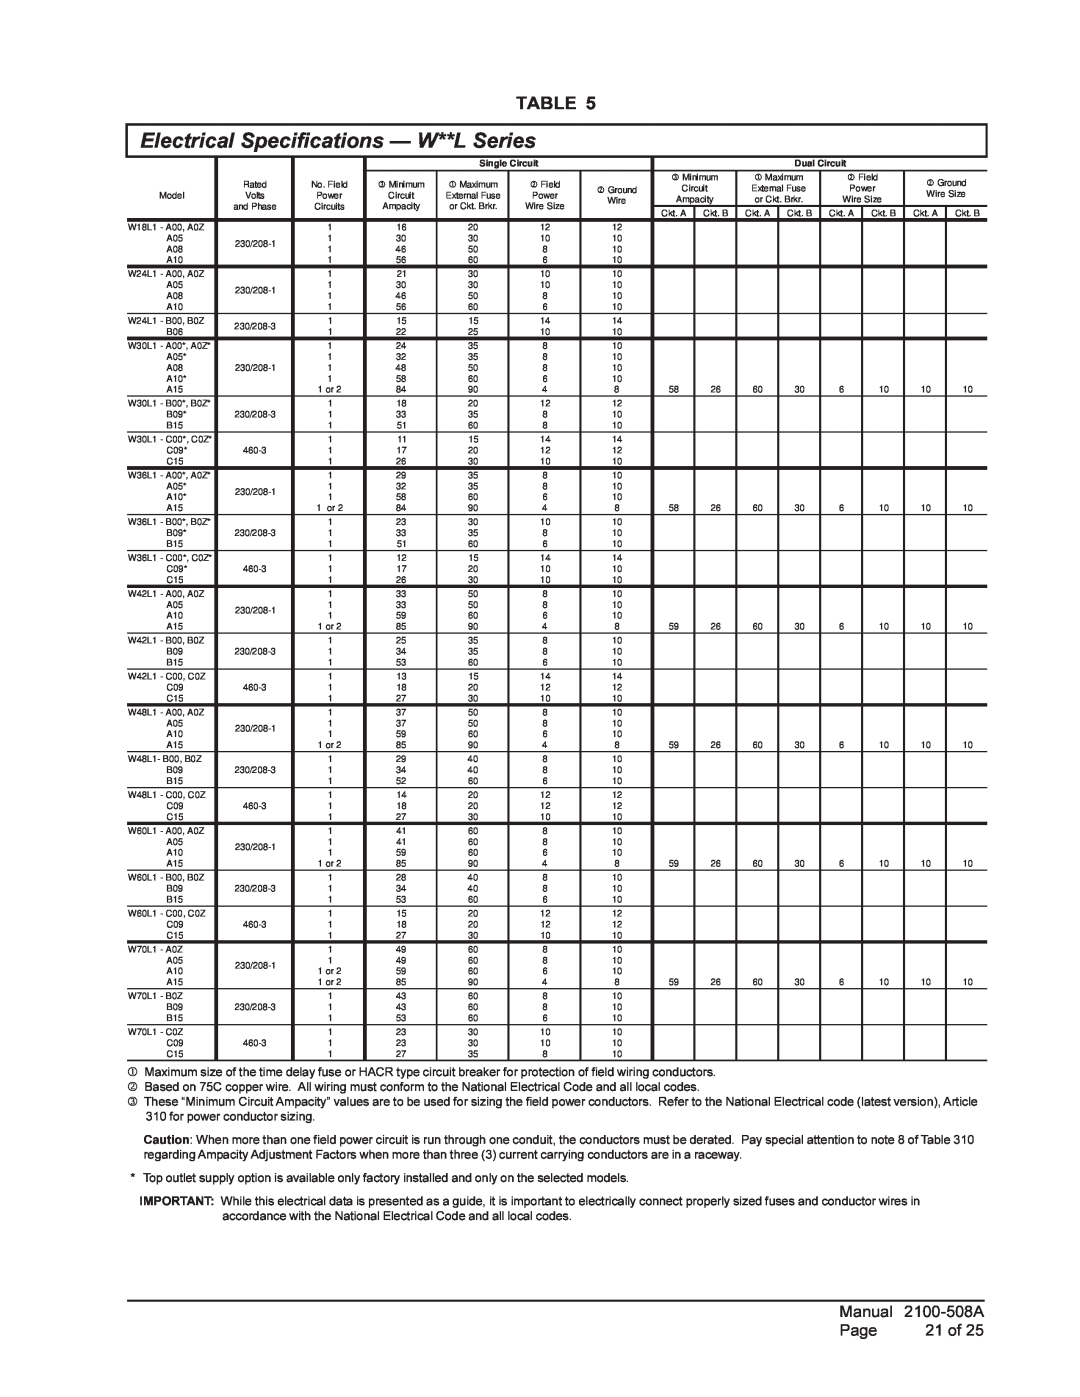 Bard W42L, 1 W48A1, W70L1, W70A1 Electrical Specifications - W**L Series, Manual, 2100-508A, Page, 21 of 